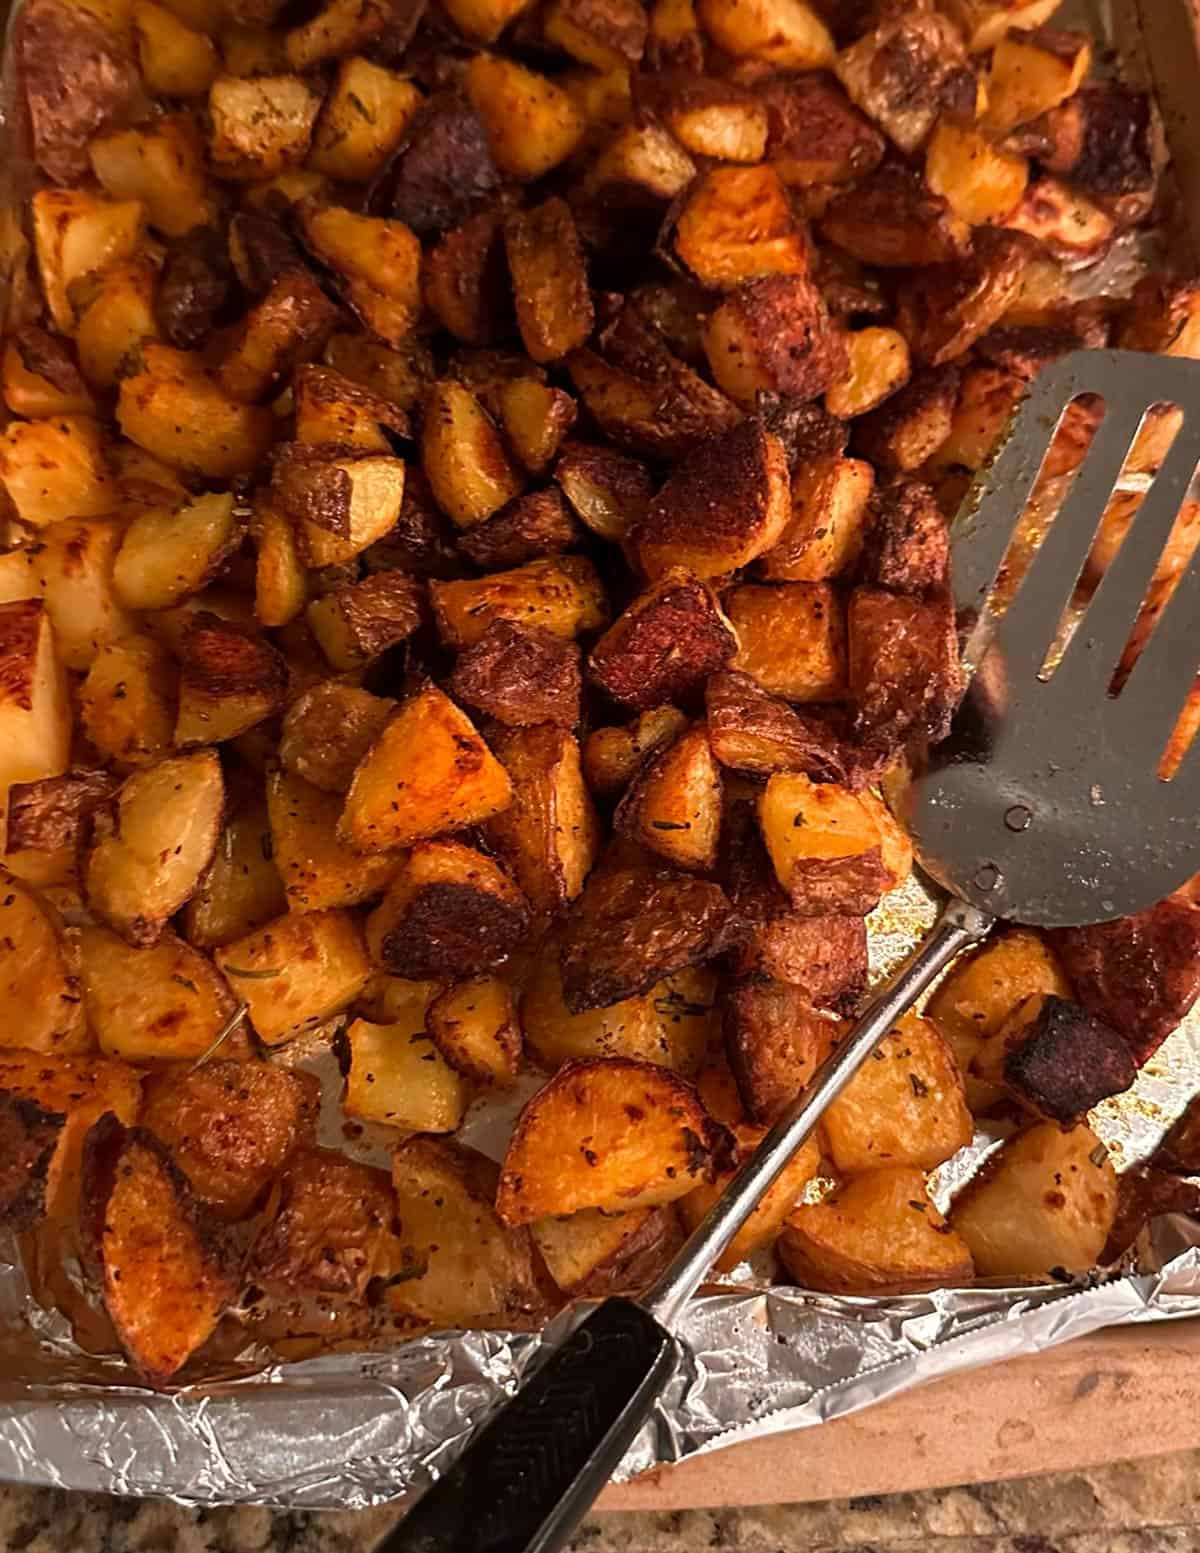 A sheet pan of roasted potatoes.